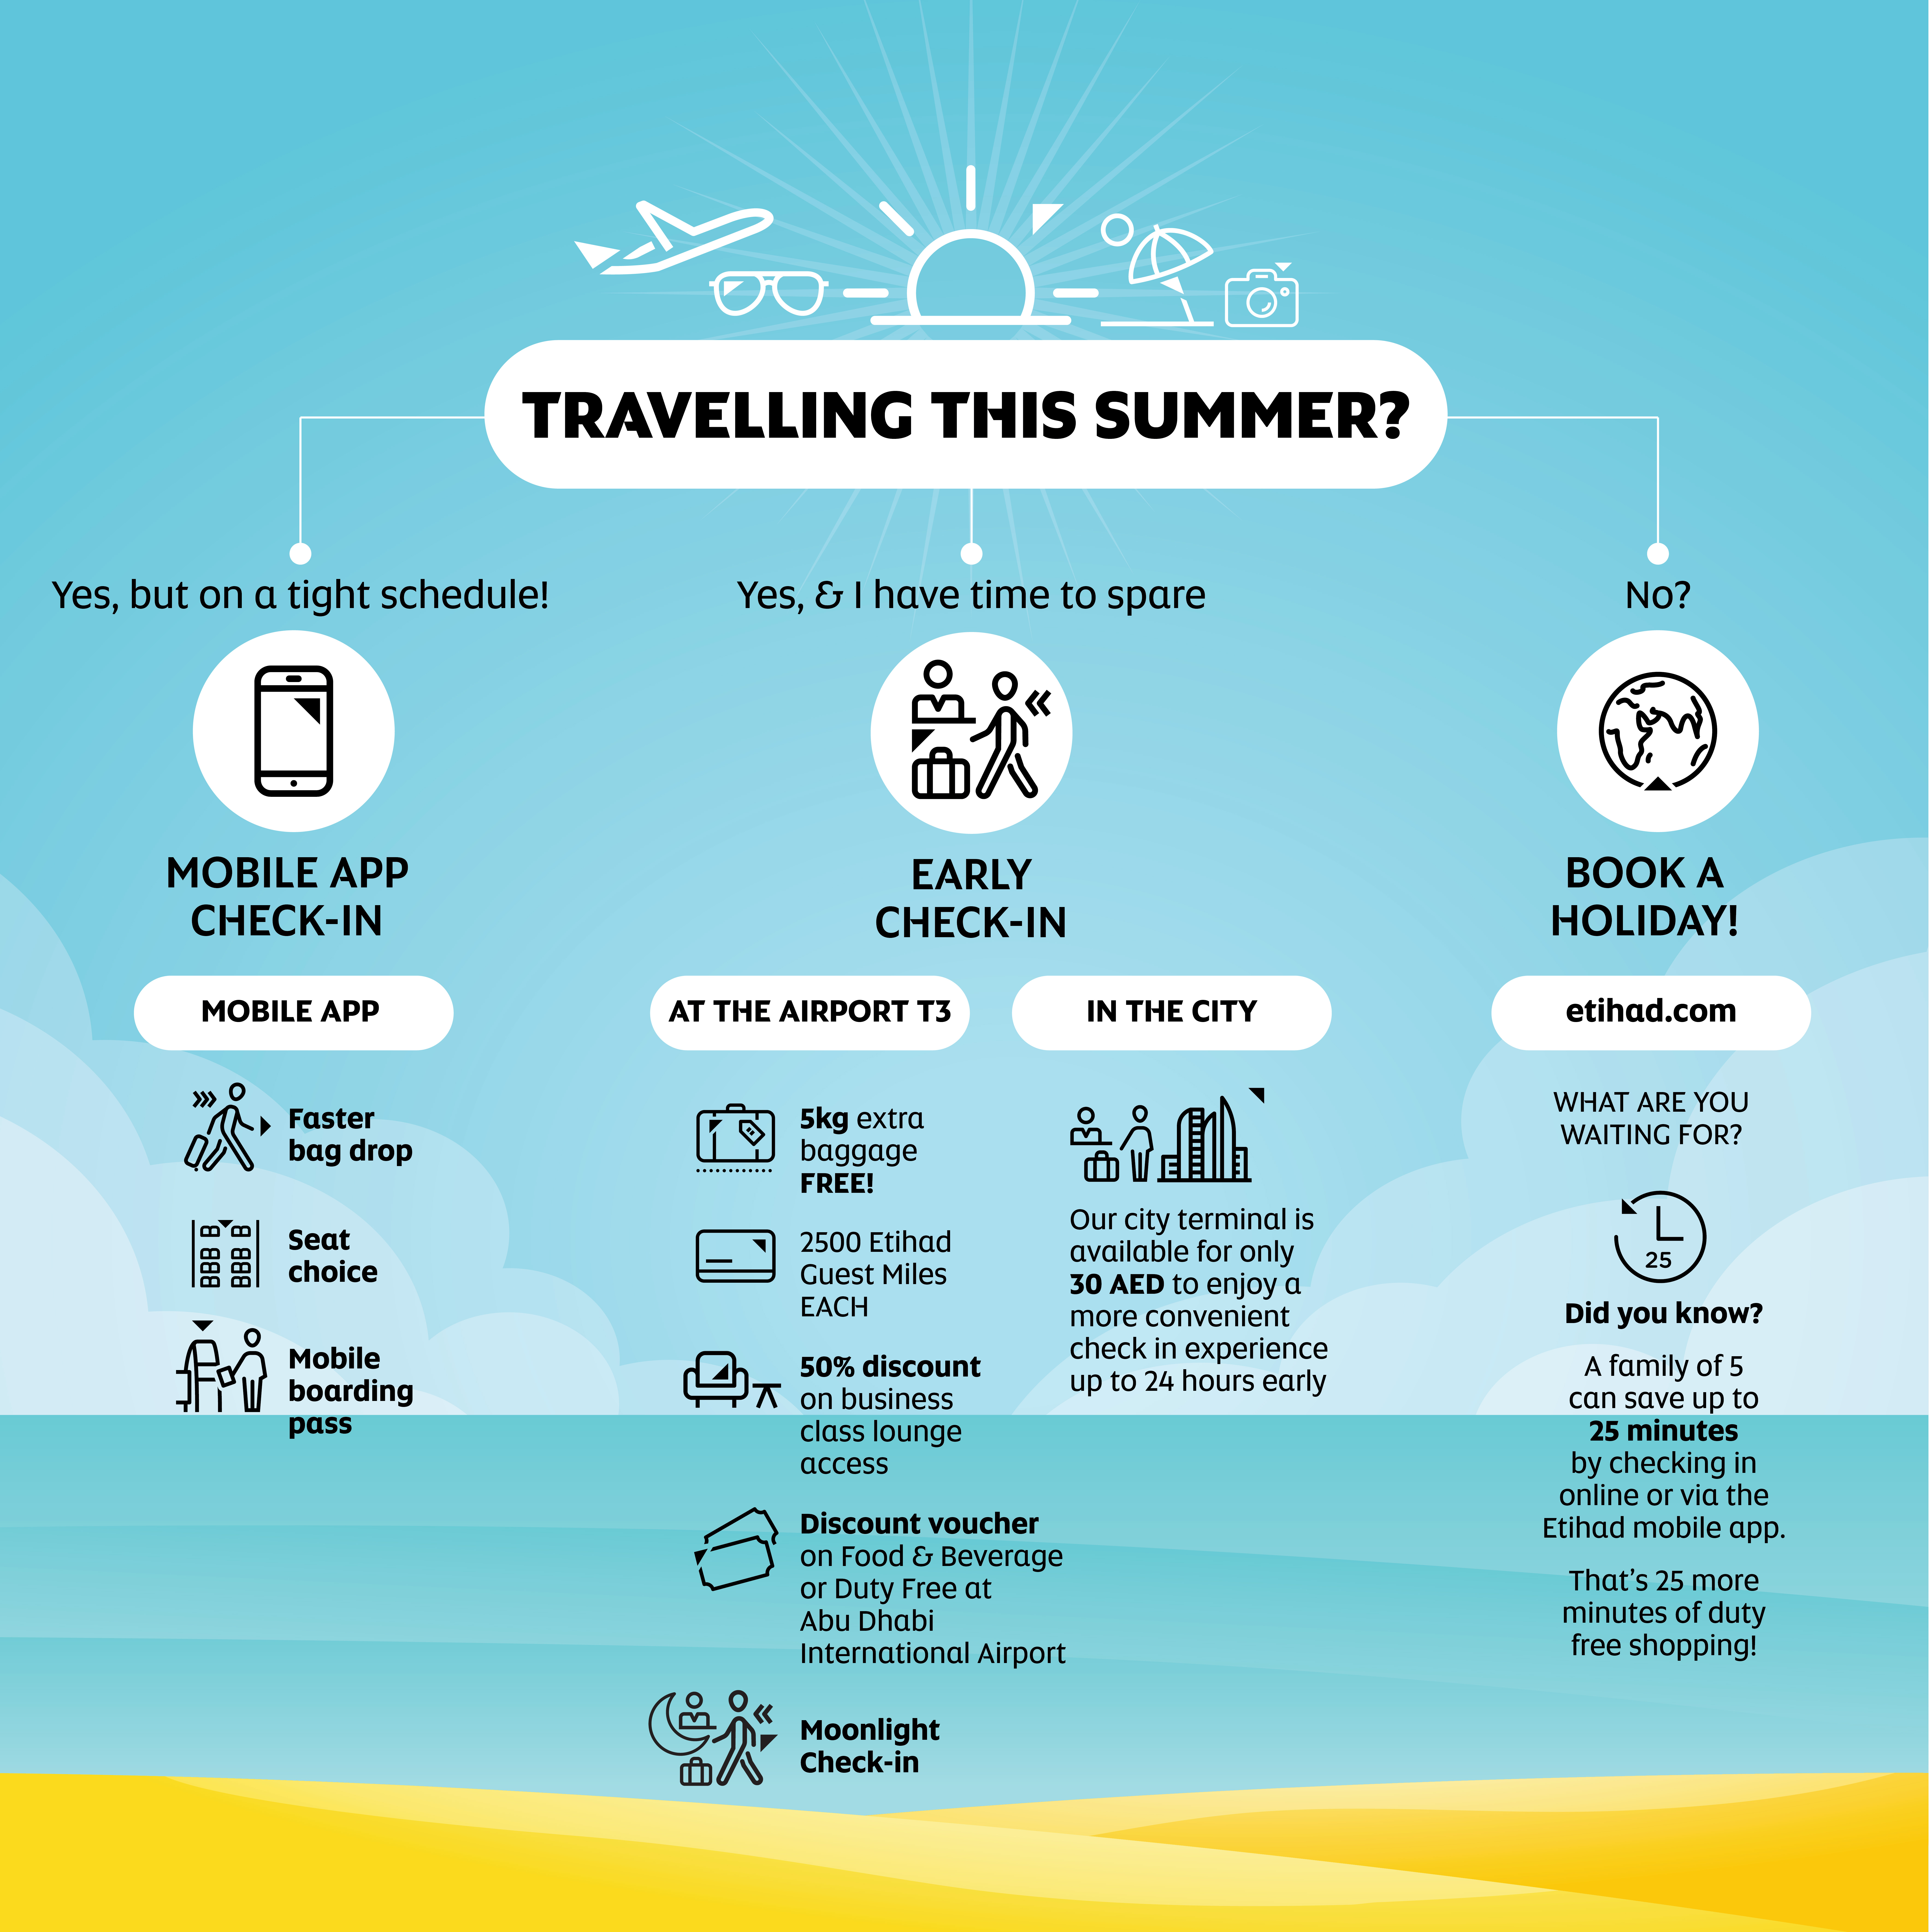 Etihad Airways Travel Advice For 2018 Summer Holidays